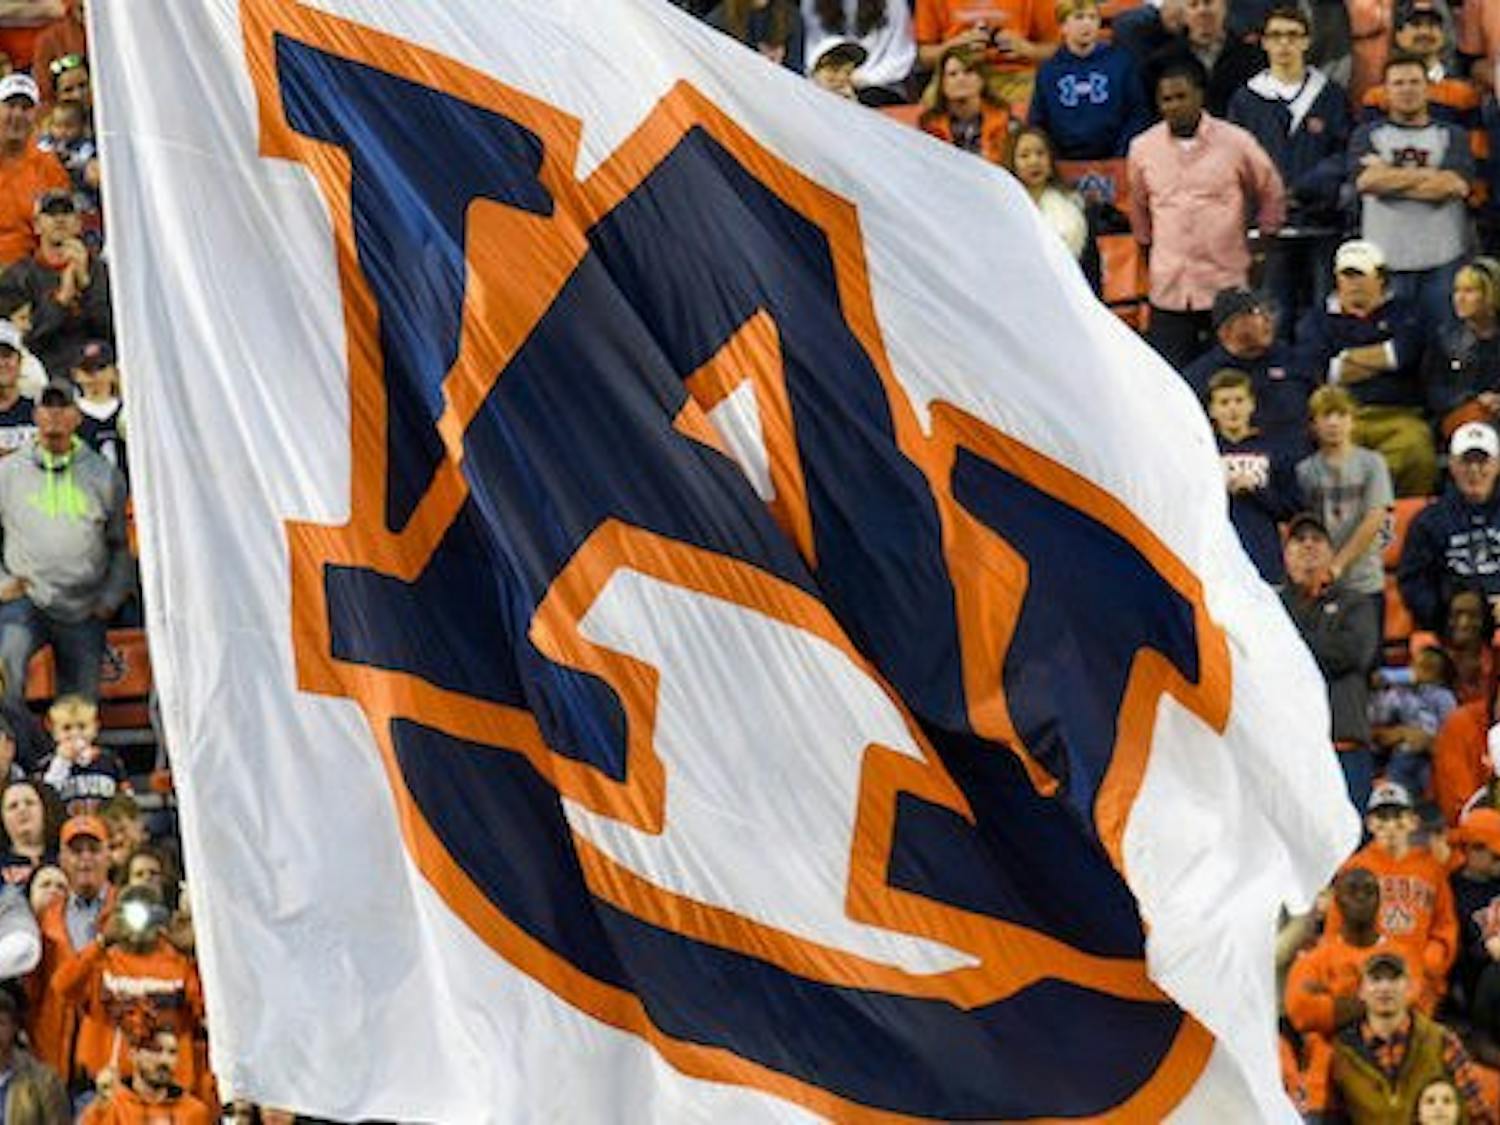 Auburn "Touchdown flag flying in front of fans